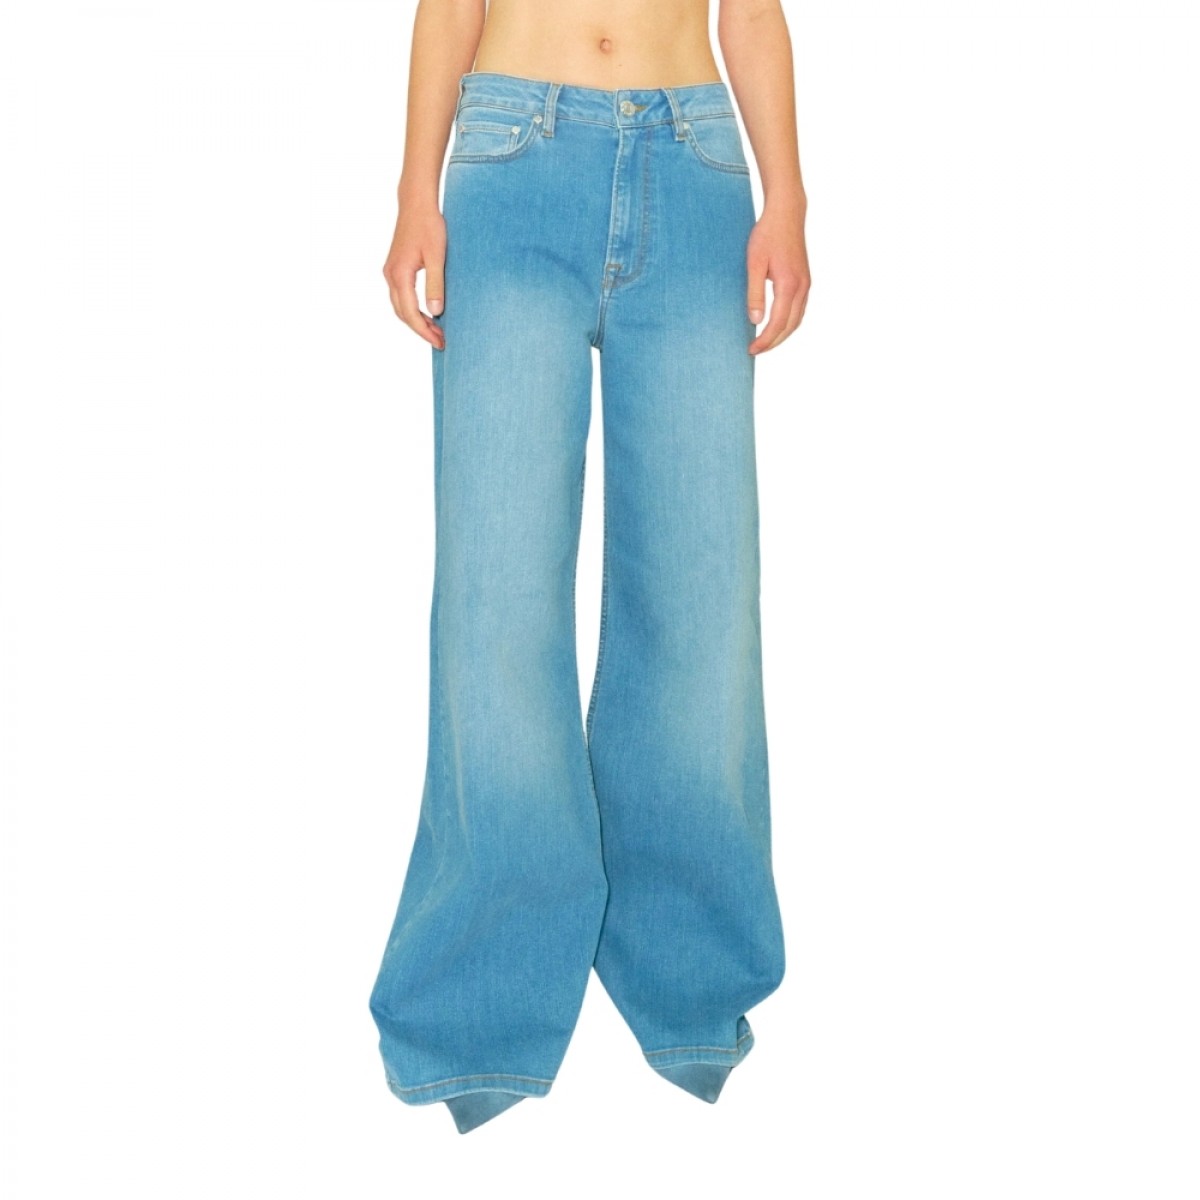 trw arizona jeans wash bleach florence - denim blue - front